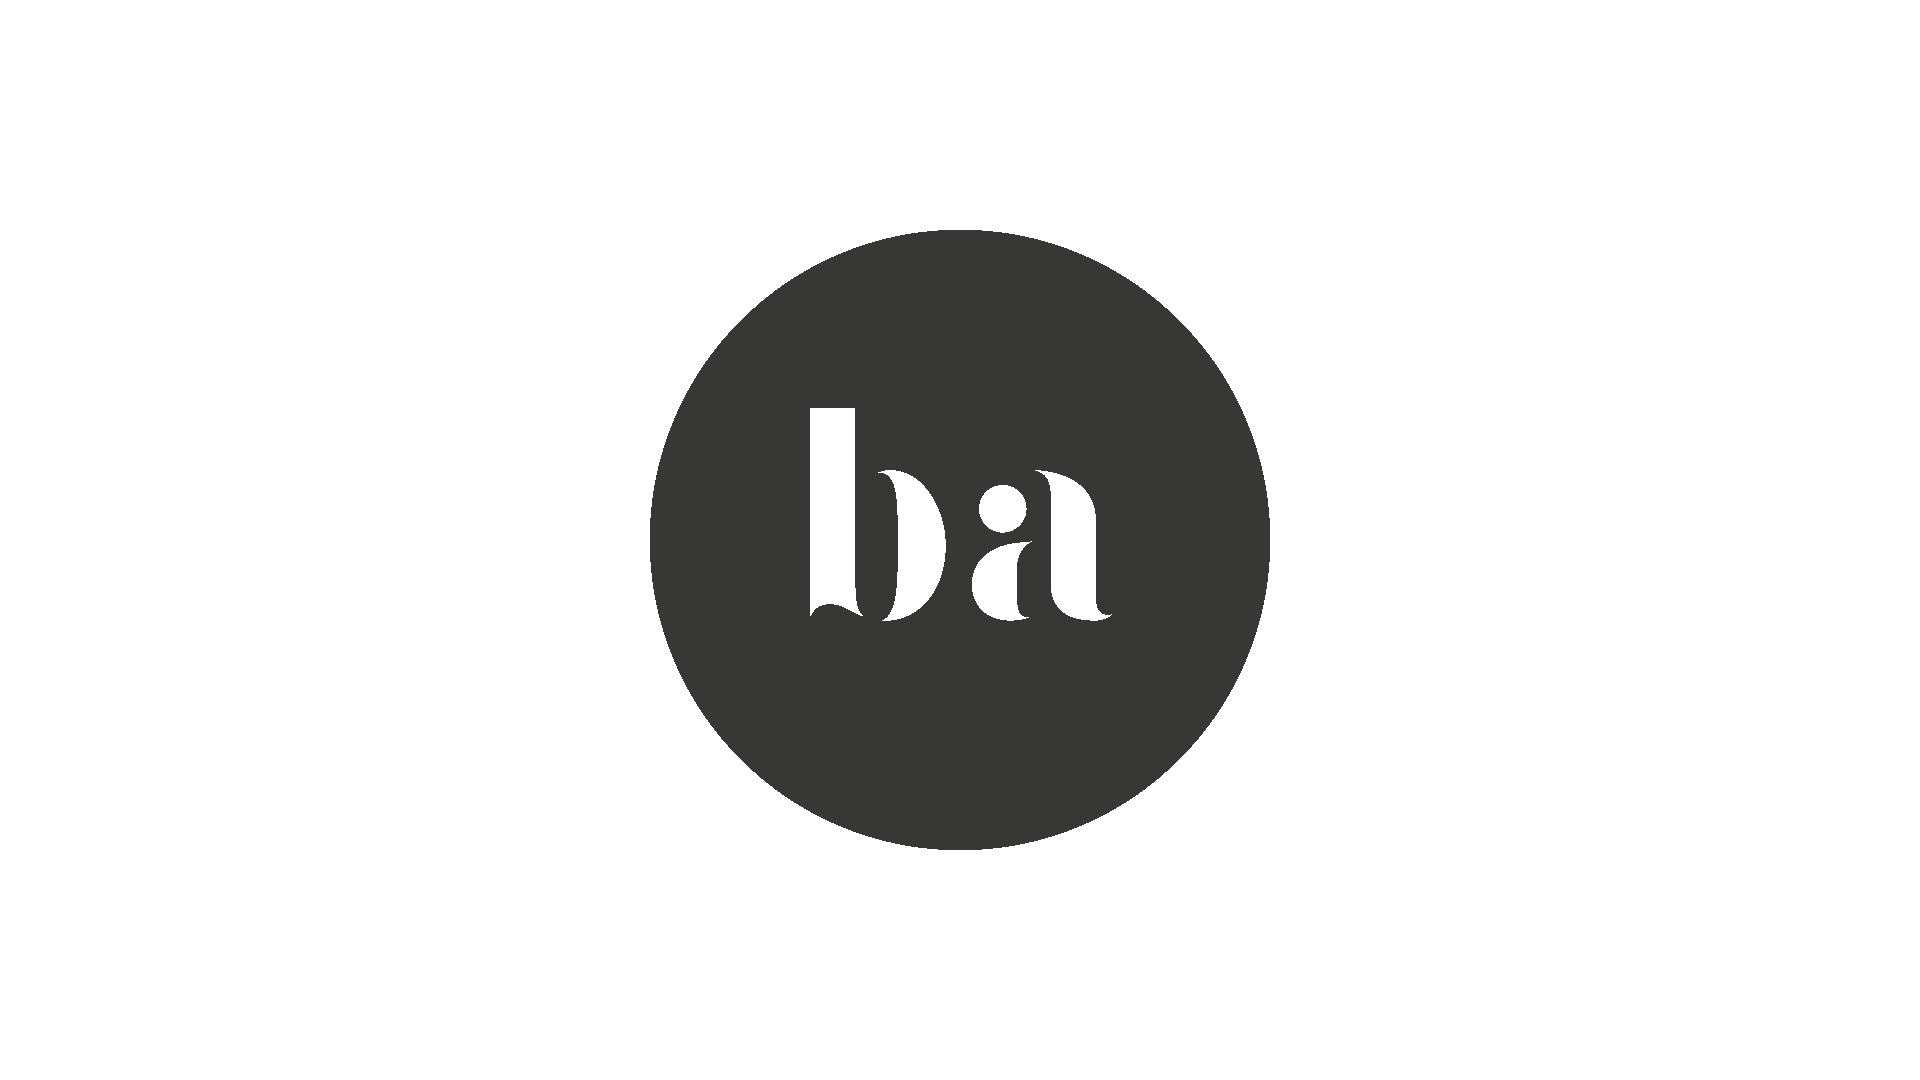 Monogram BA Logo Graphic by Greenlines Studios · Creative Fabrica